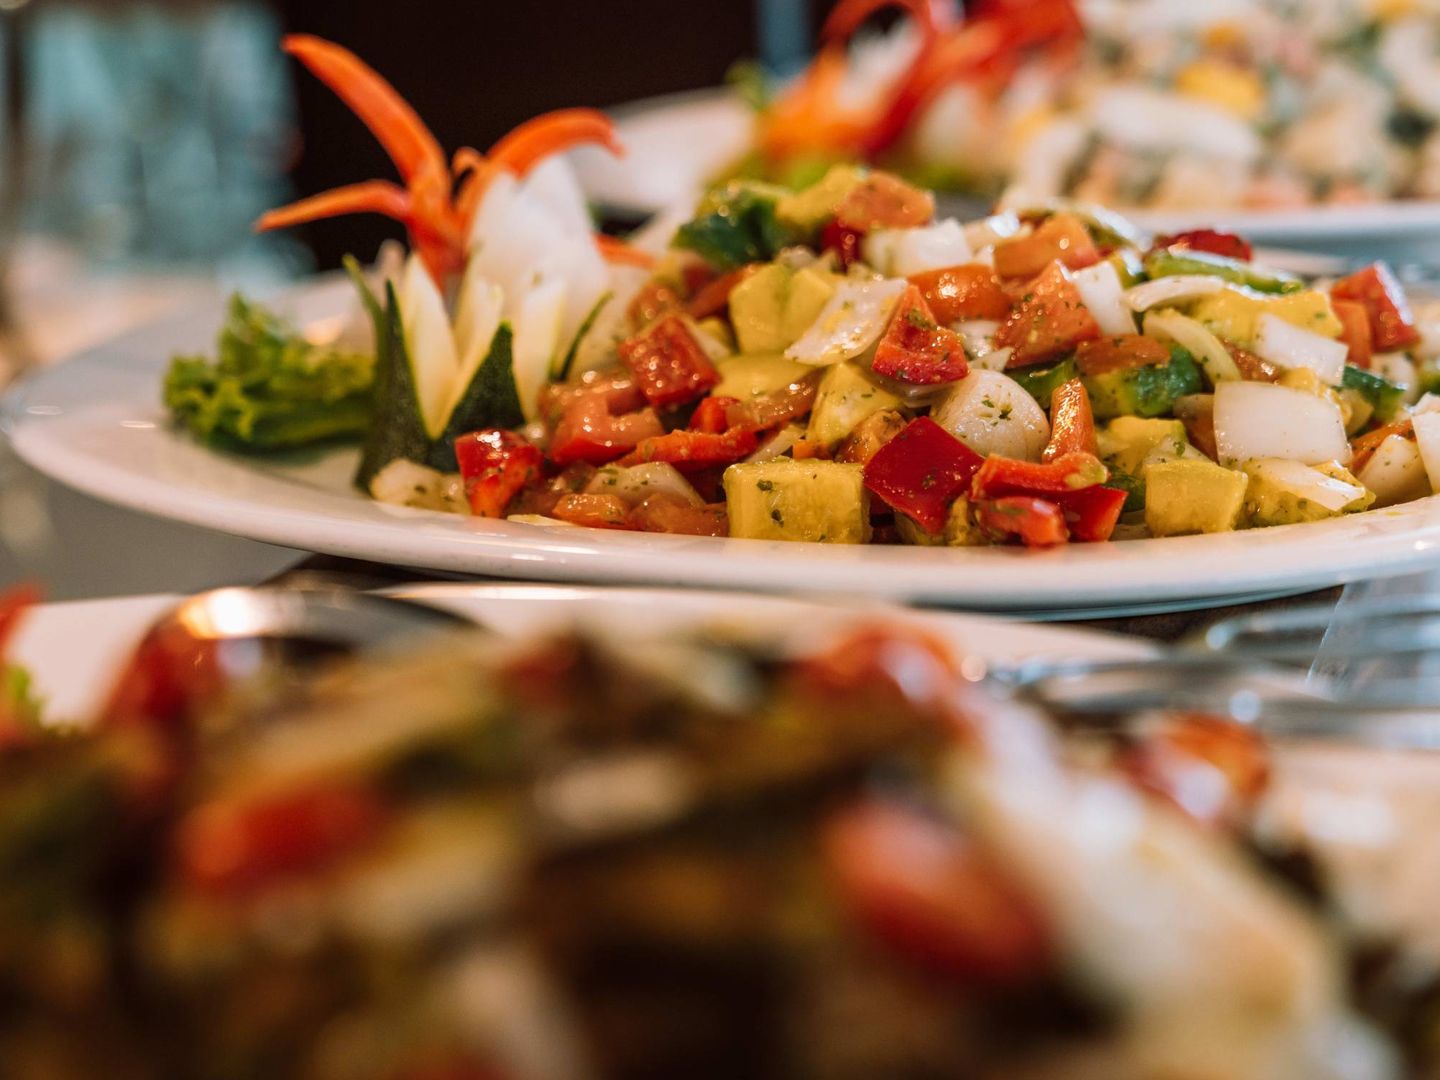 Detalle de la comida vietnamita a bordo del crucero de Croisi Europe. (Oliver Vegas)